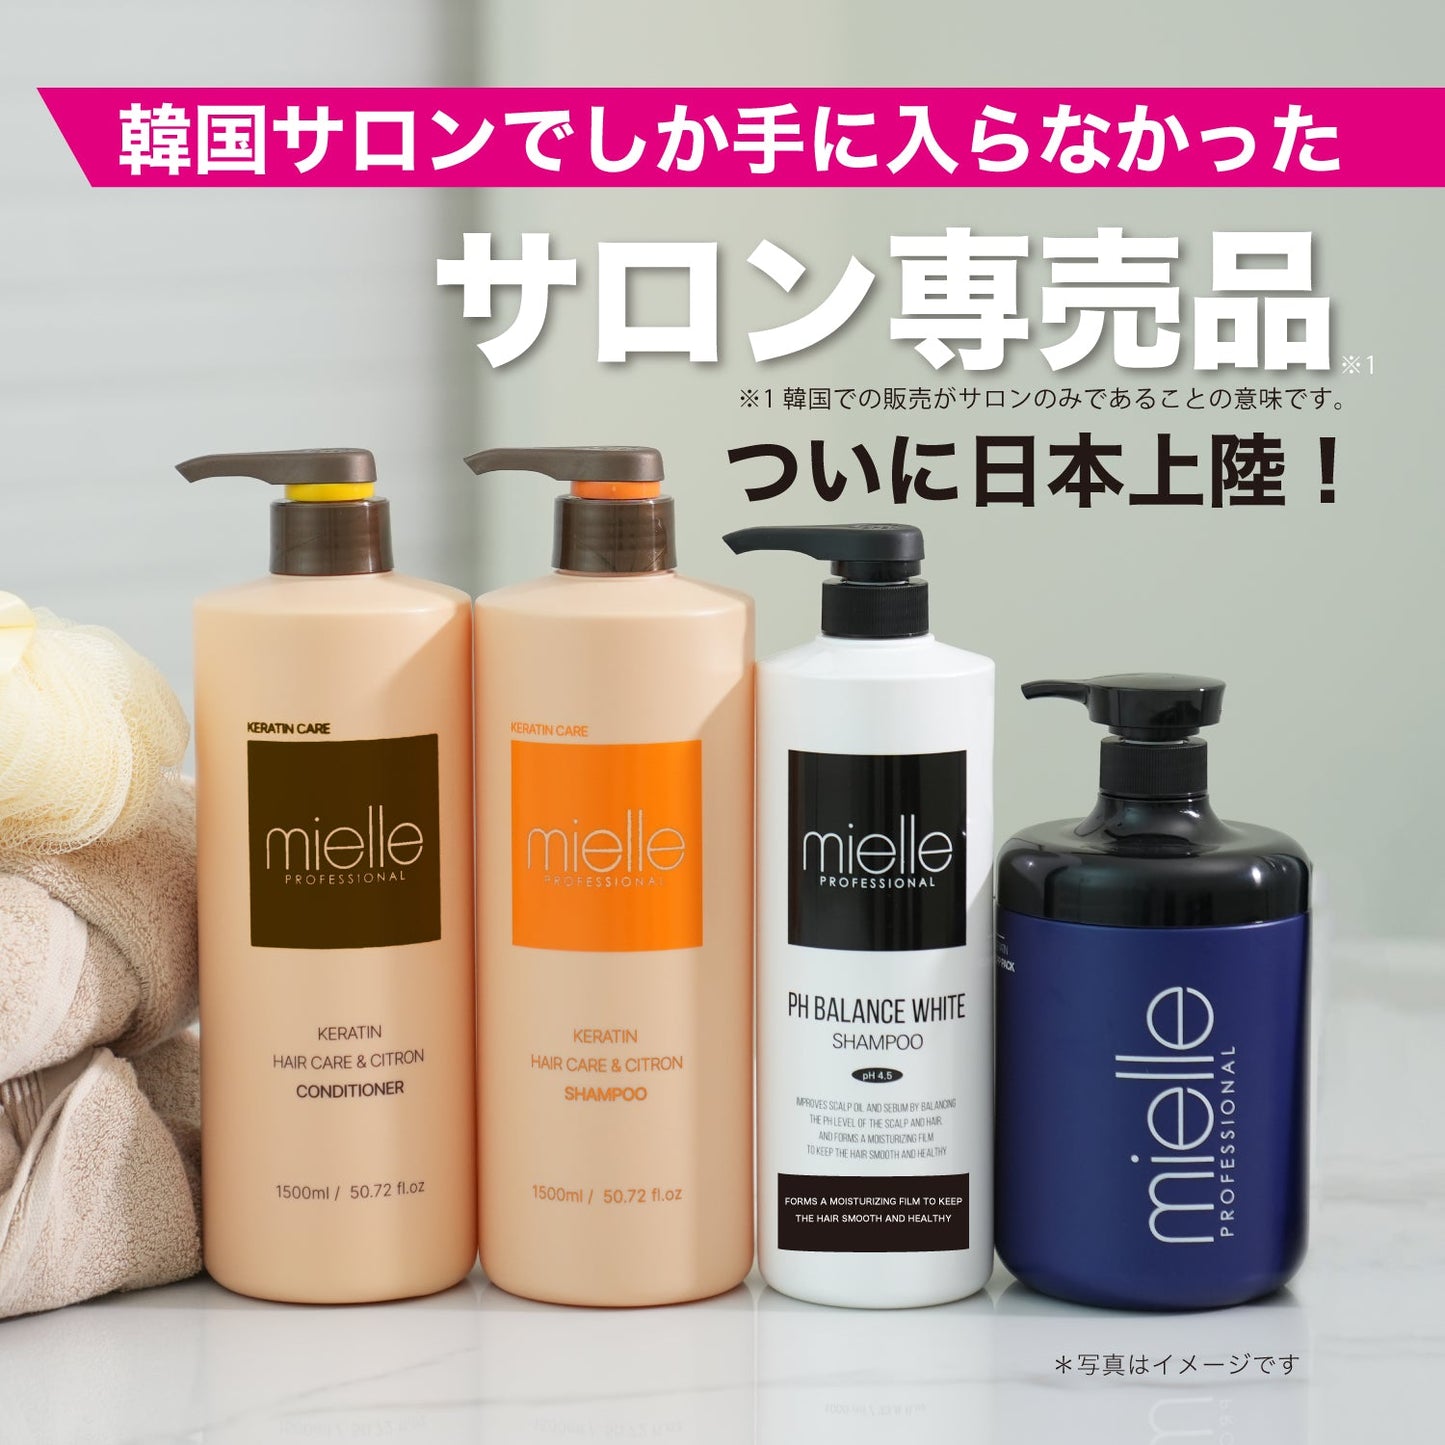 mielle PROFESSIONAL(ミエルプロフェッショナル) Keratin Care Shampoo (ケラチンケアシャンプー） 1500ml-LOVE KOREA